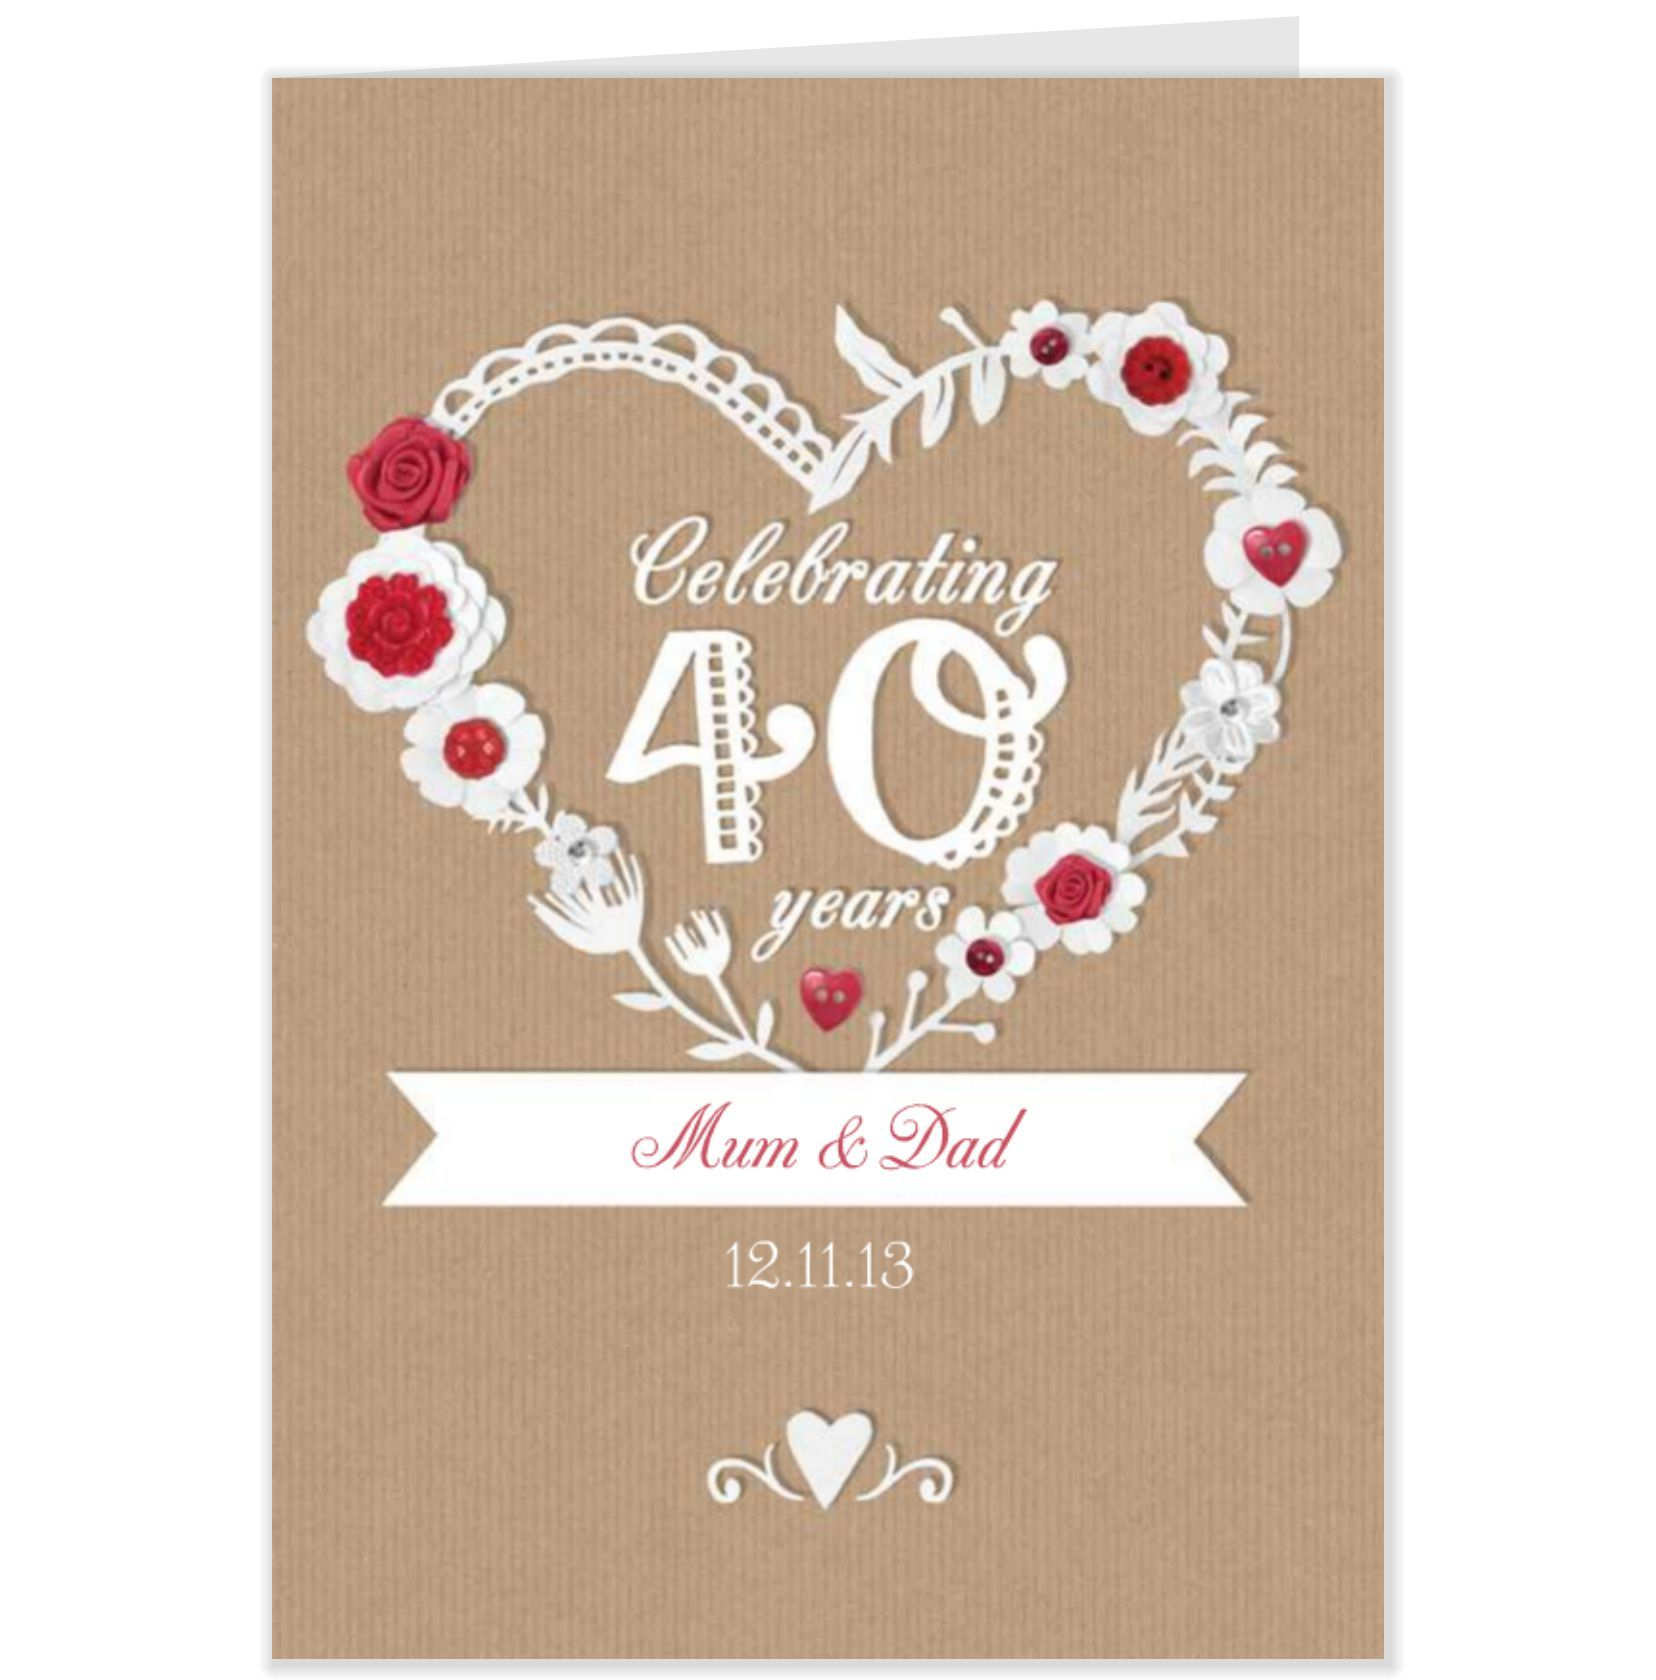 40Th Wedding Anniversary Invitations Image Result For Hawaiian Themed 40th Wedding Anniversary